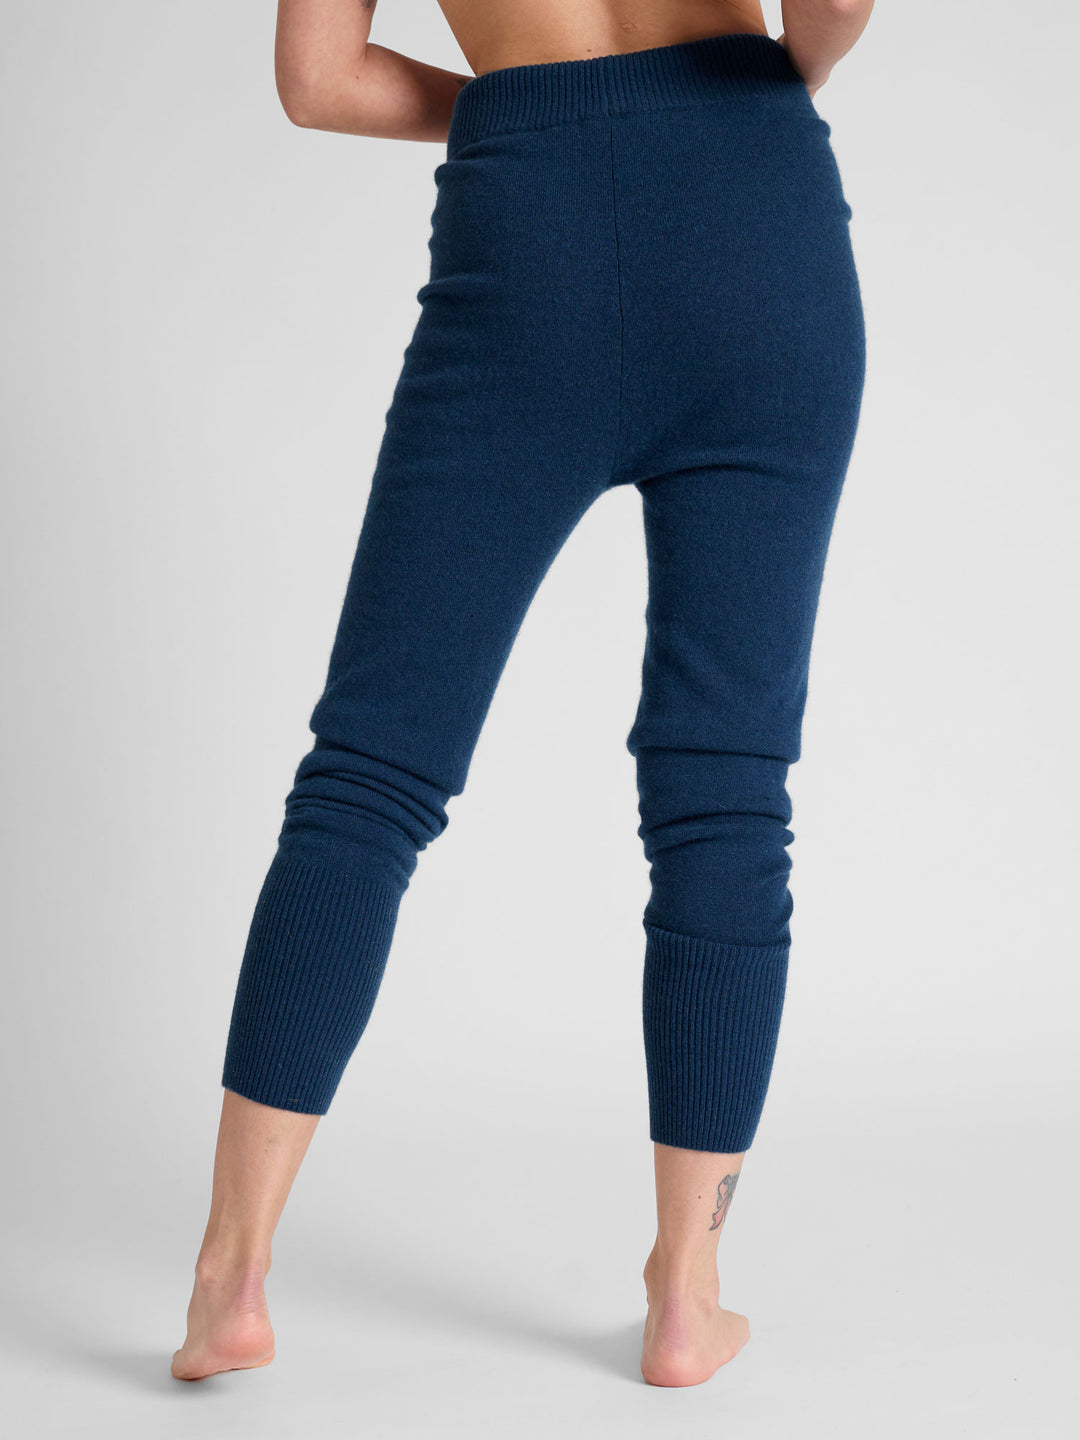 cashmere pants "Chill pants" in 100% pure cashmere. Scandinavian design by Kashmina. Color: mountain blue